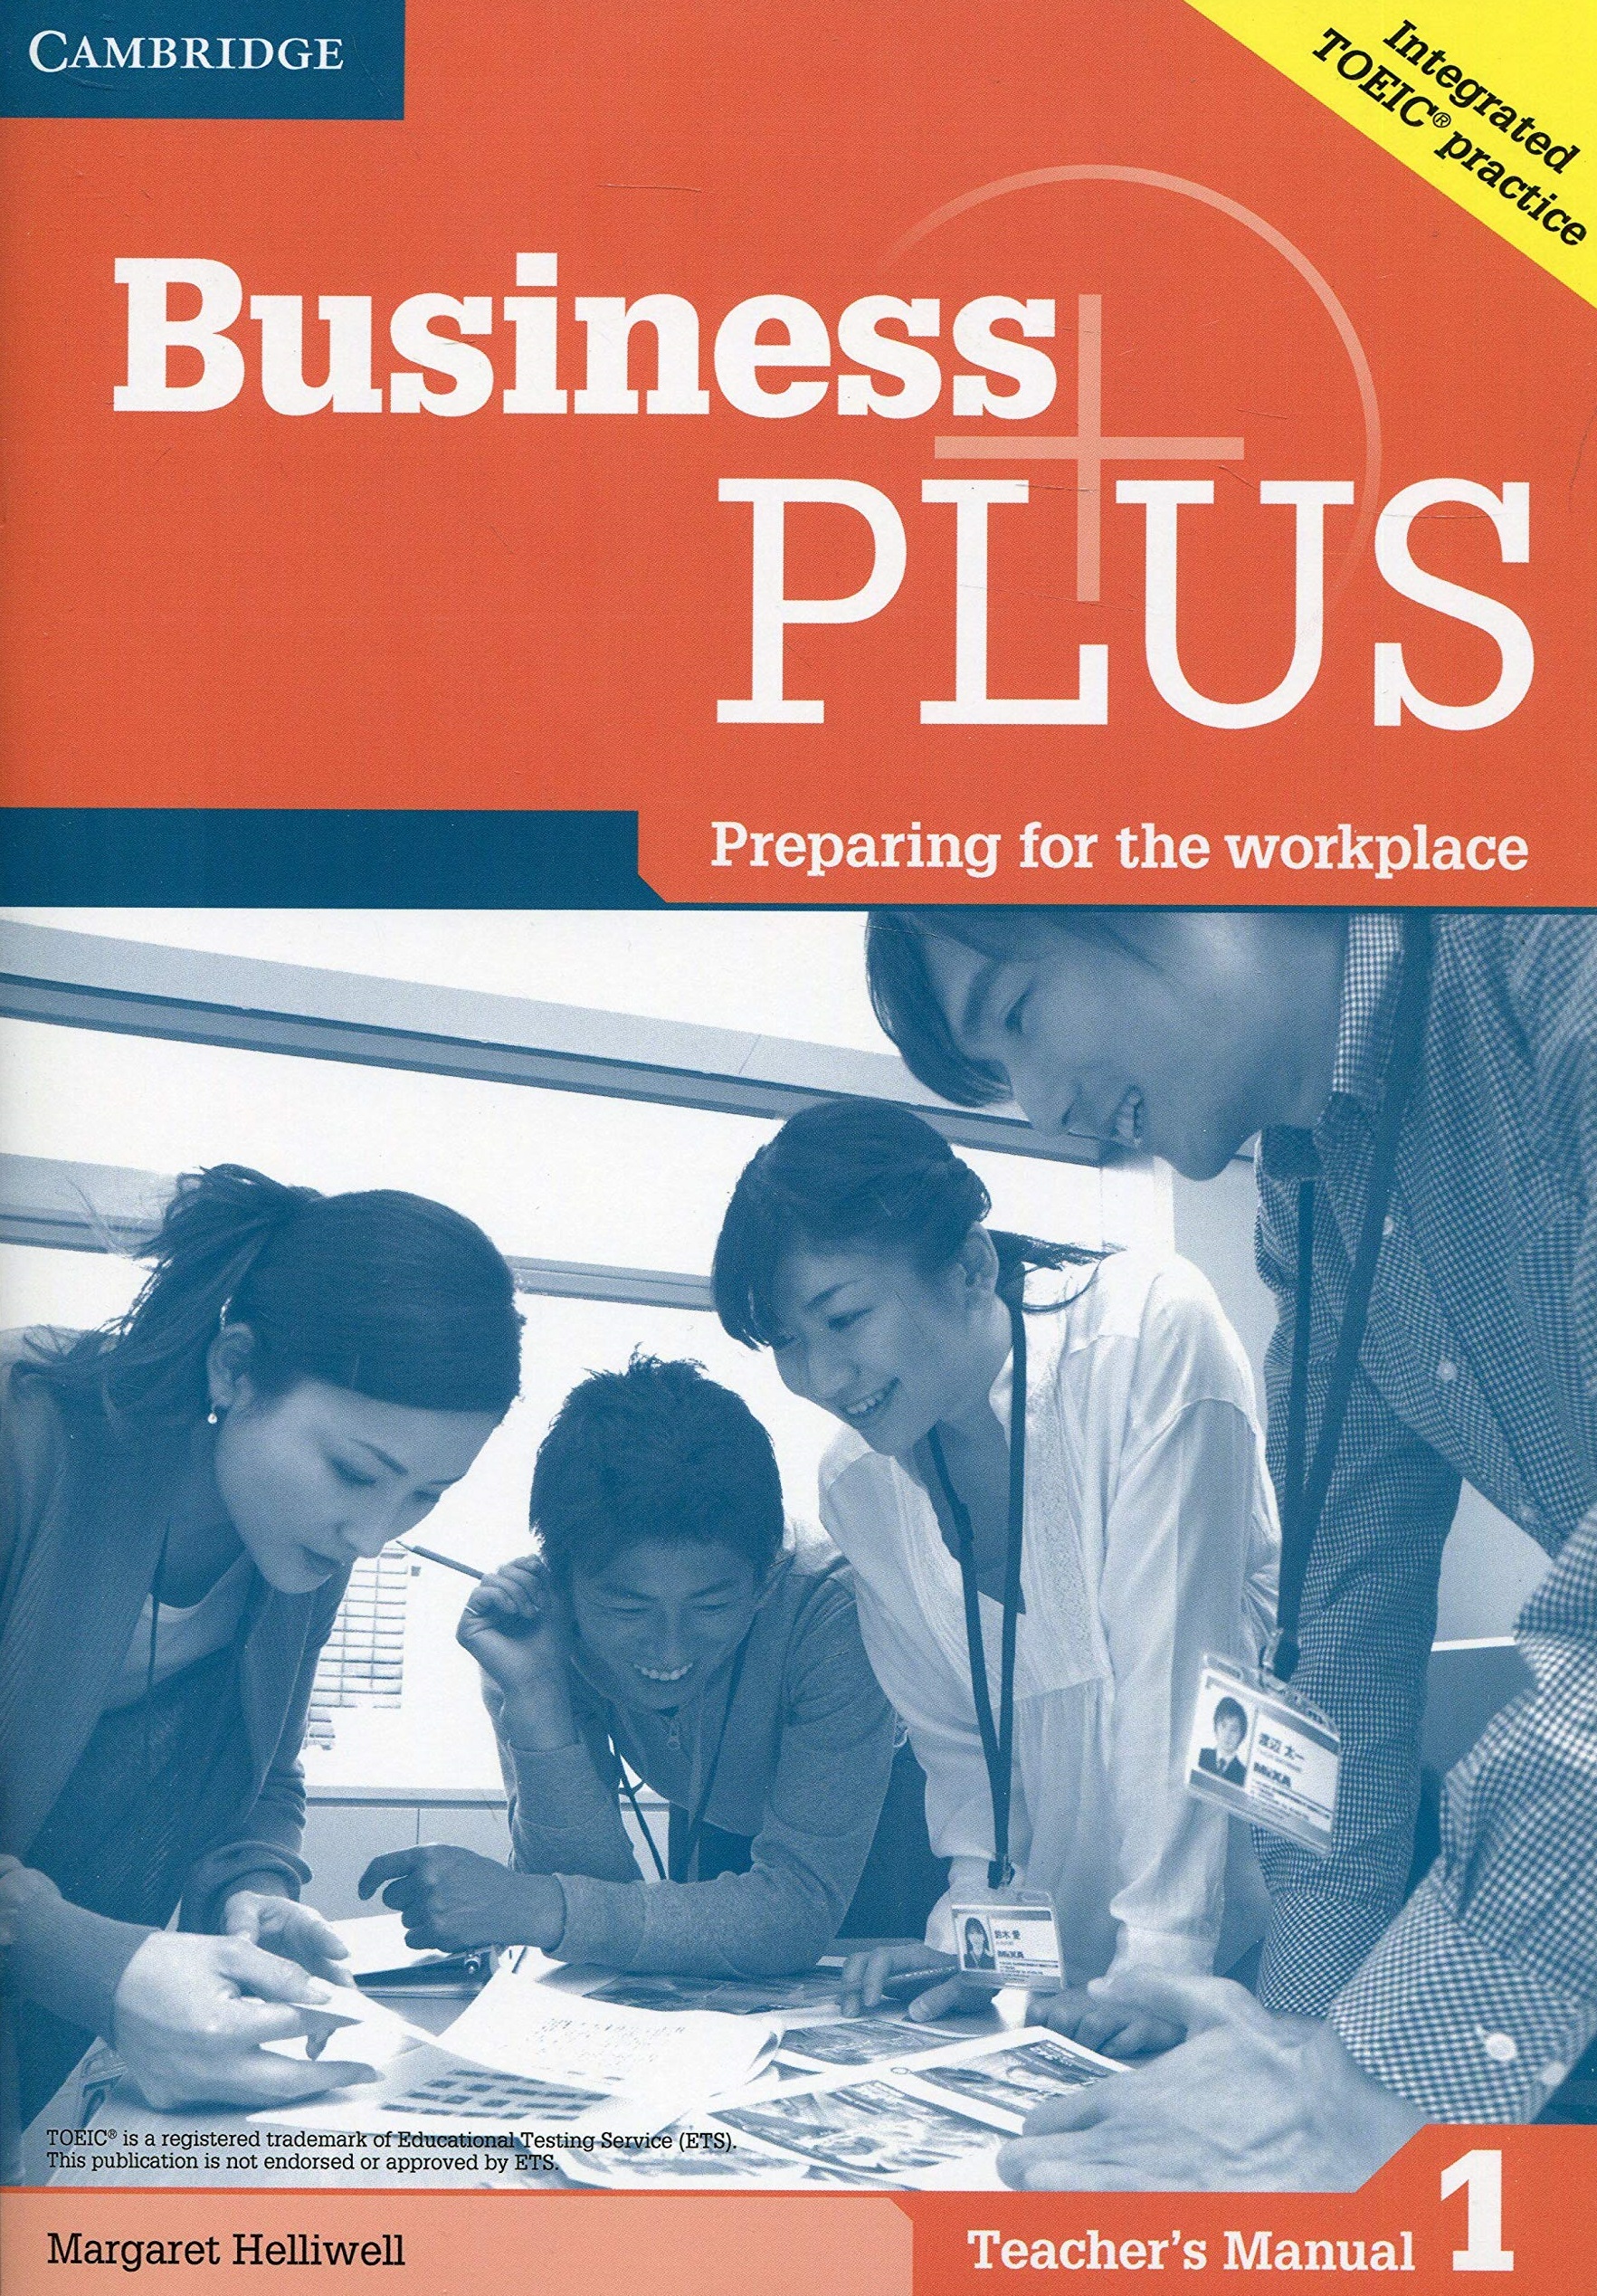 Business English книга. English for Business studies. Cambridge Business English. Бизнес английский учебник Cambridge. Books for english teachers